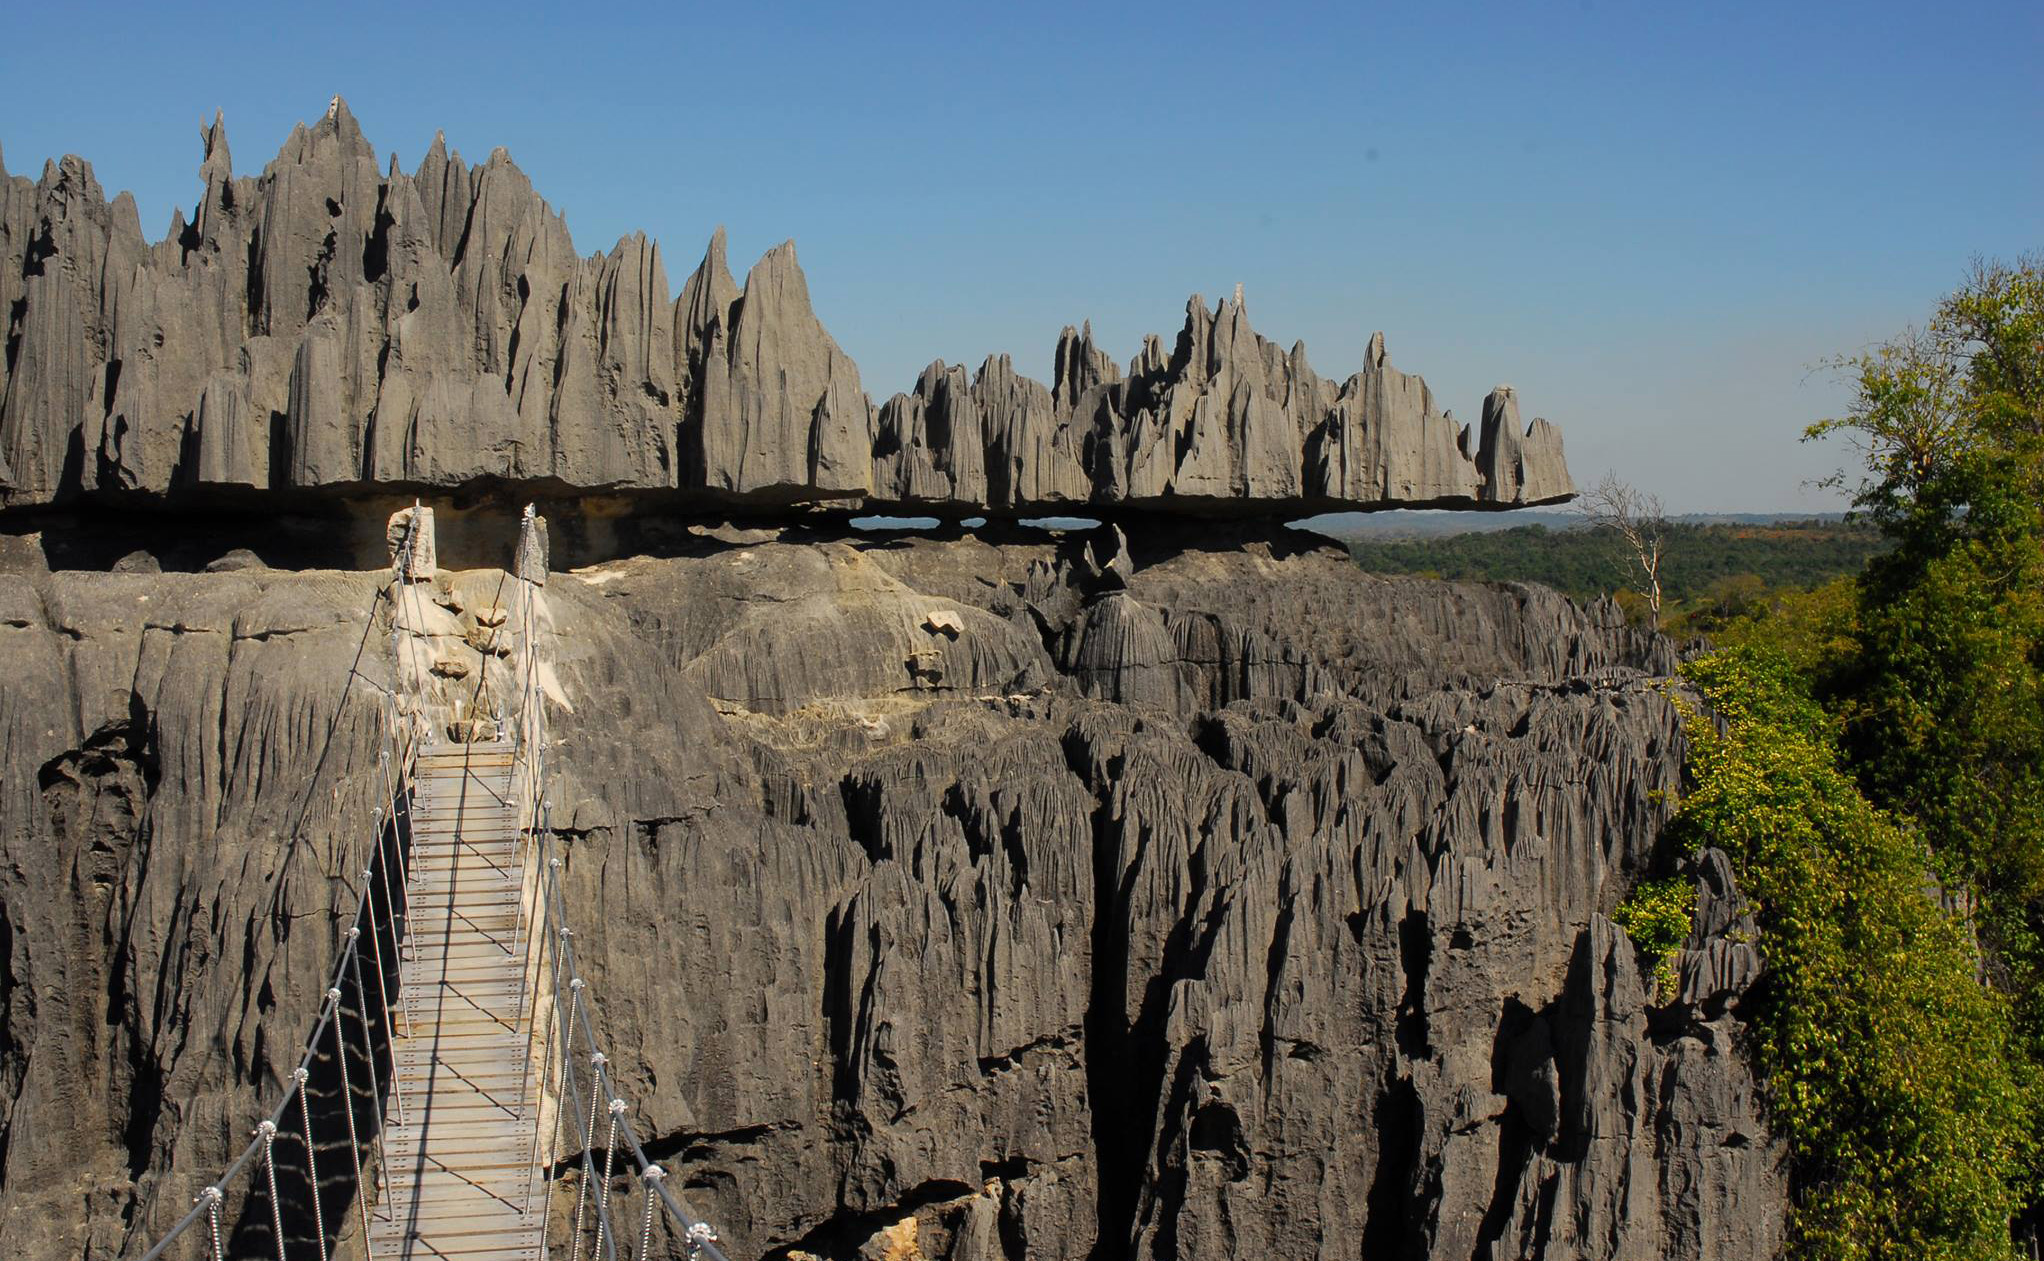 Tsingy de Bemahara - Limestone Karst Forest in Madagascar